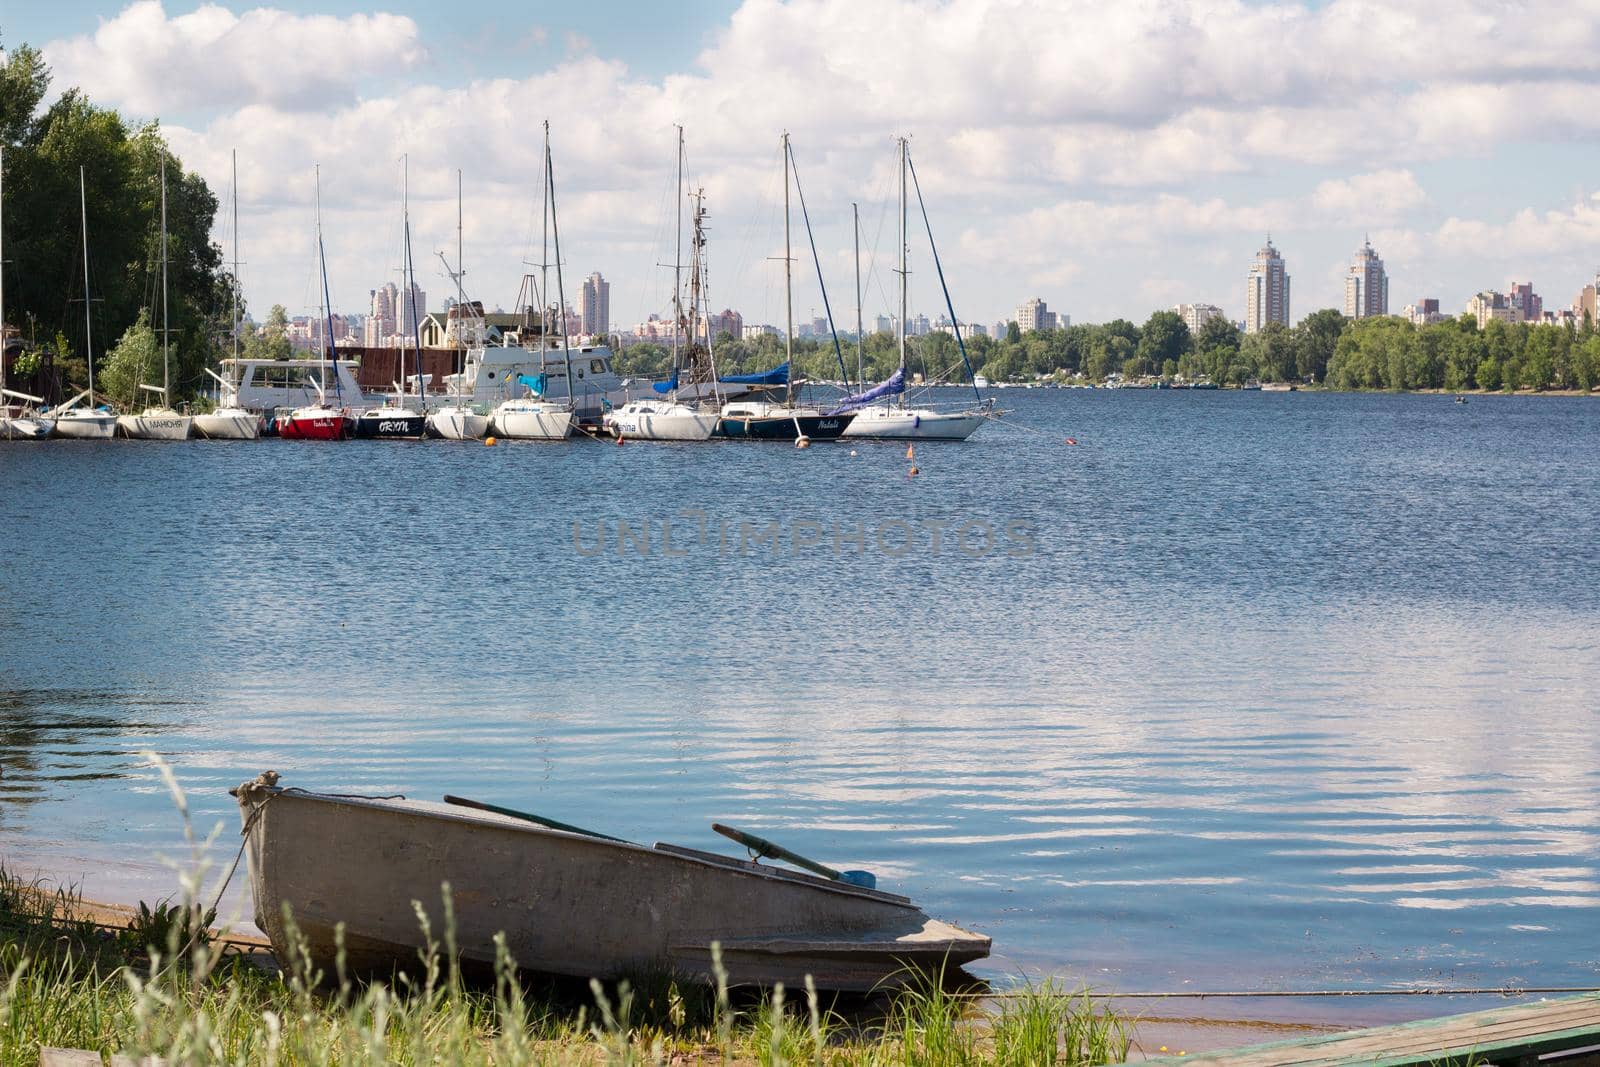 Small fishing boat standing near marina with sailing yachts on river bank